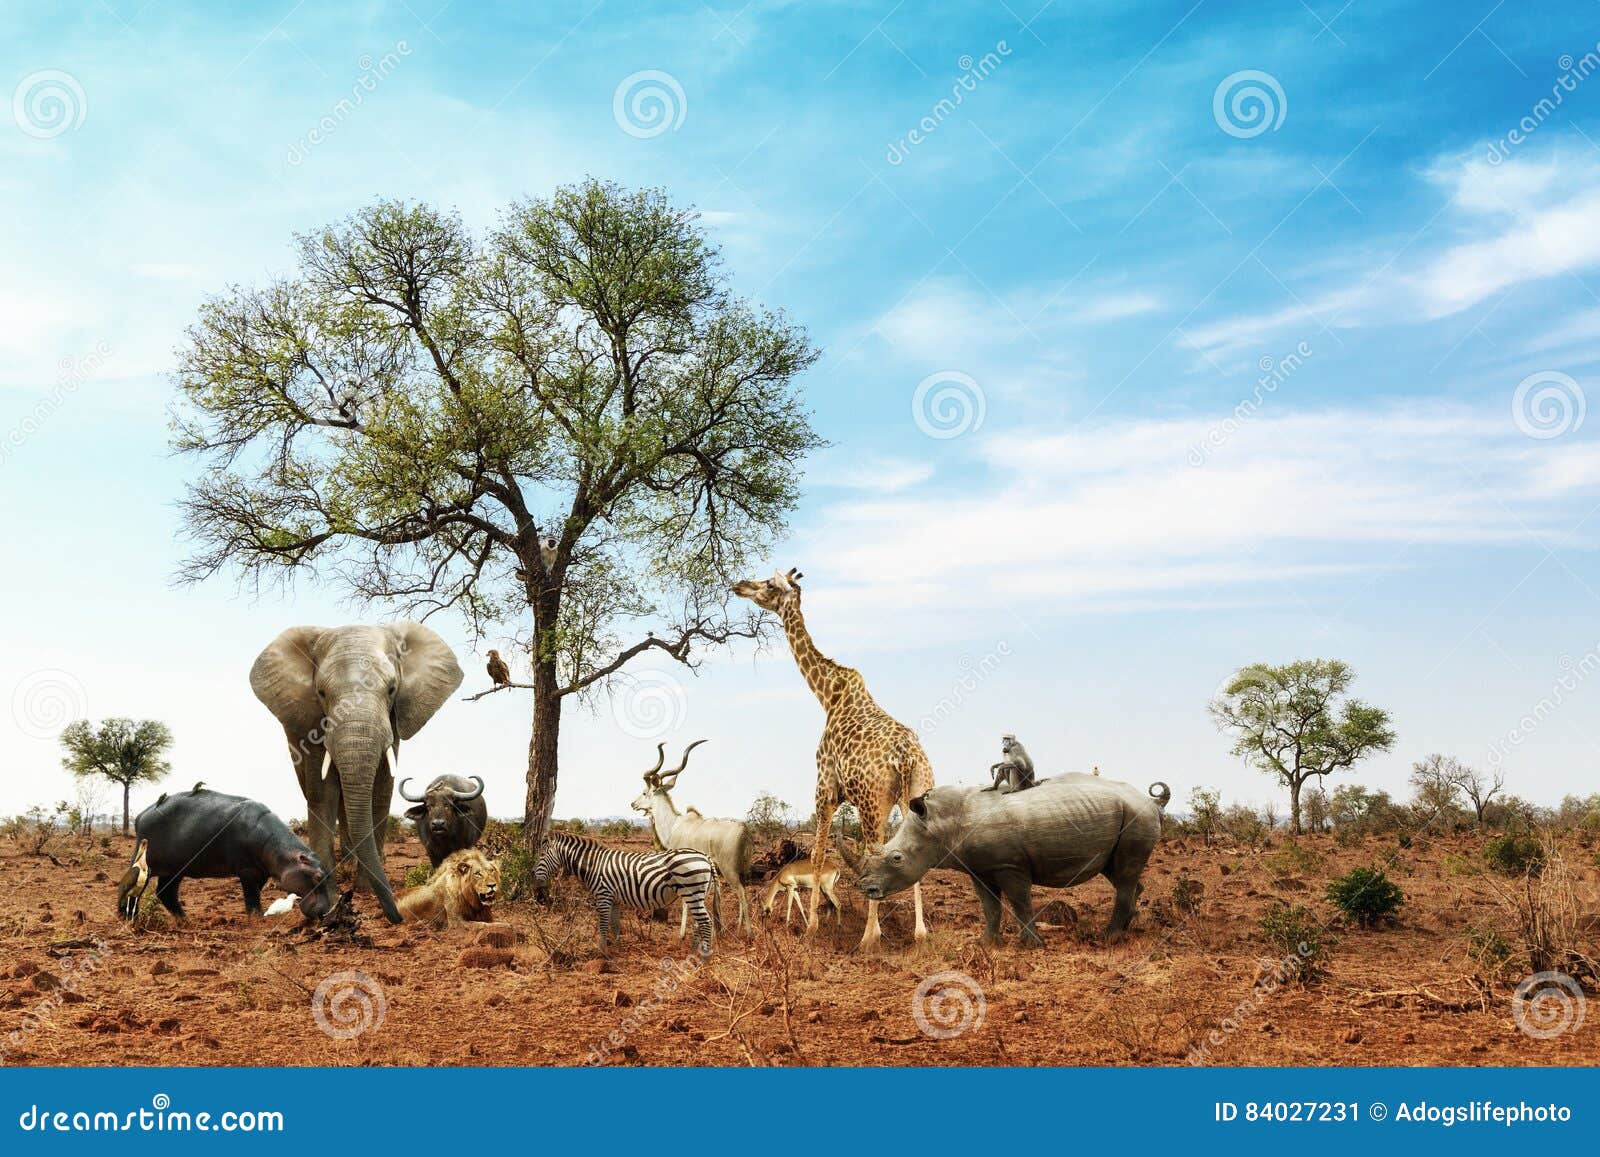 african safari animals meeting together around tree